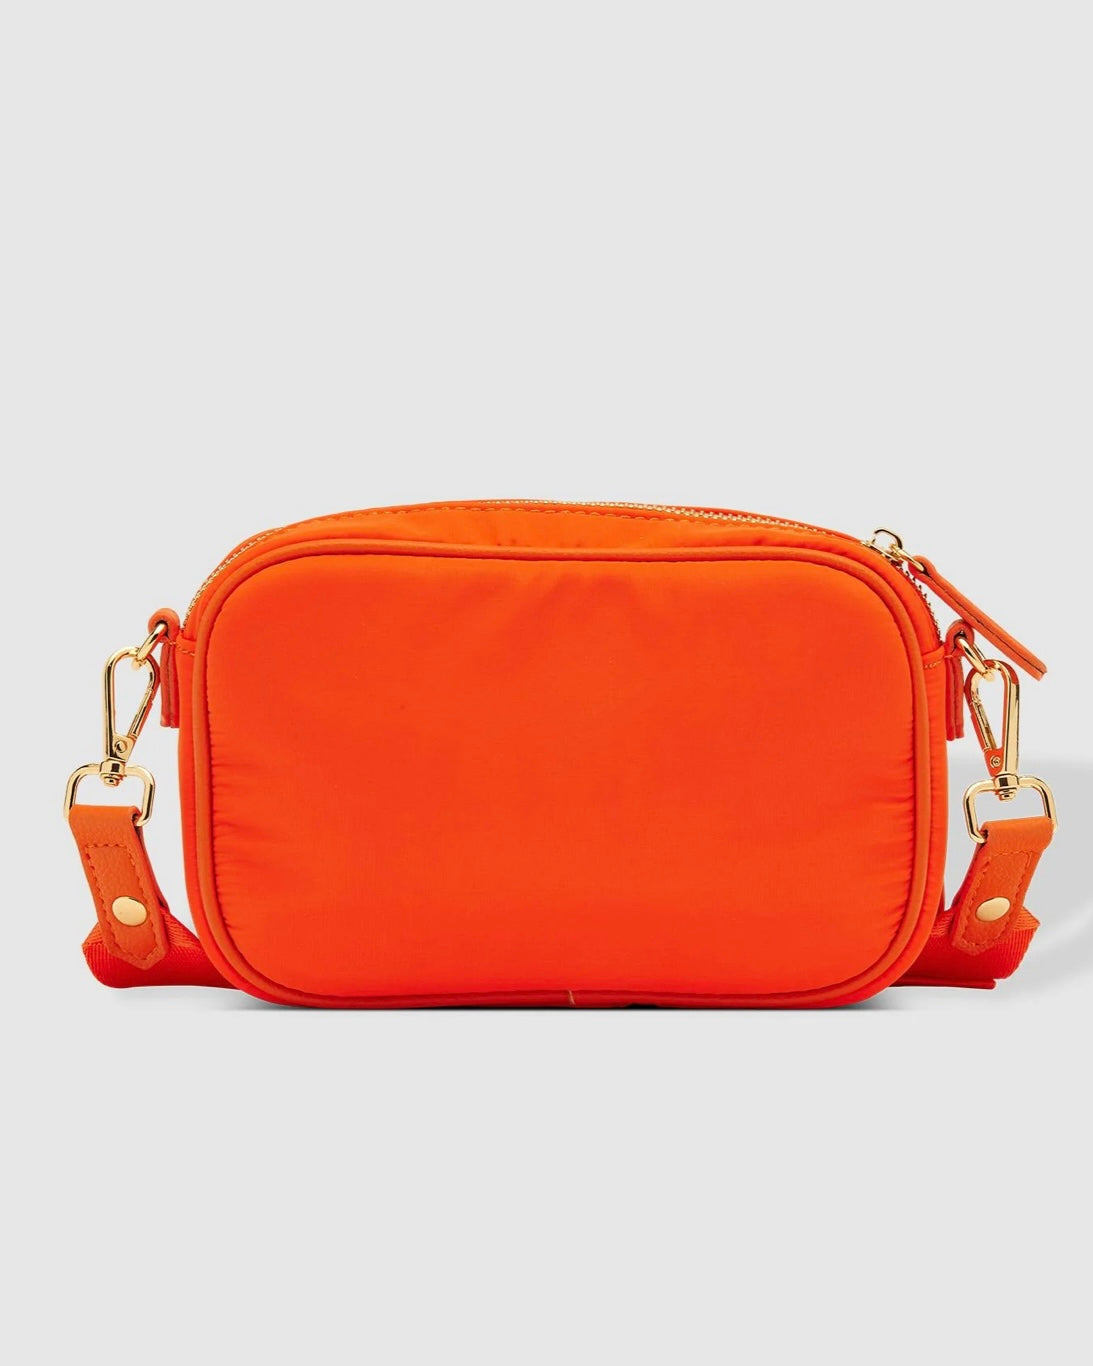 louenhide, cali, nylon, crossbody bag, orange bag